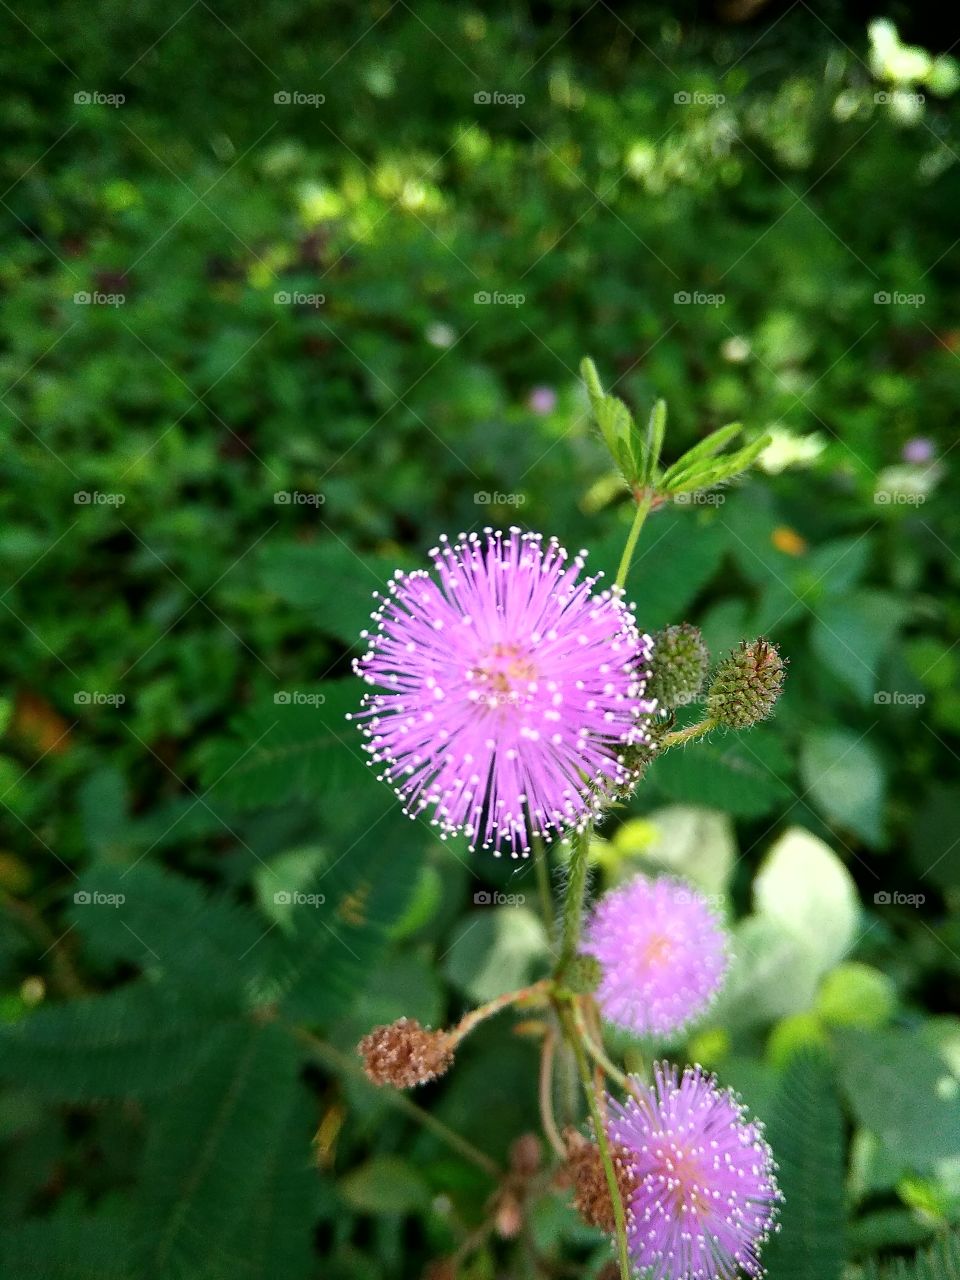 pinkish little flower growing after rainy season in India